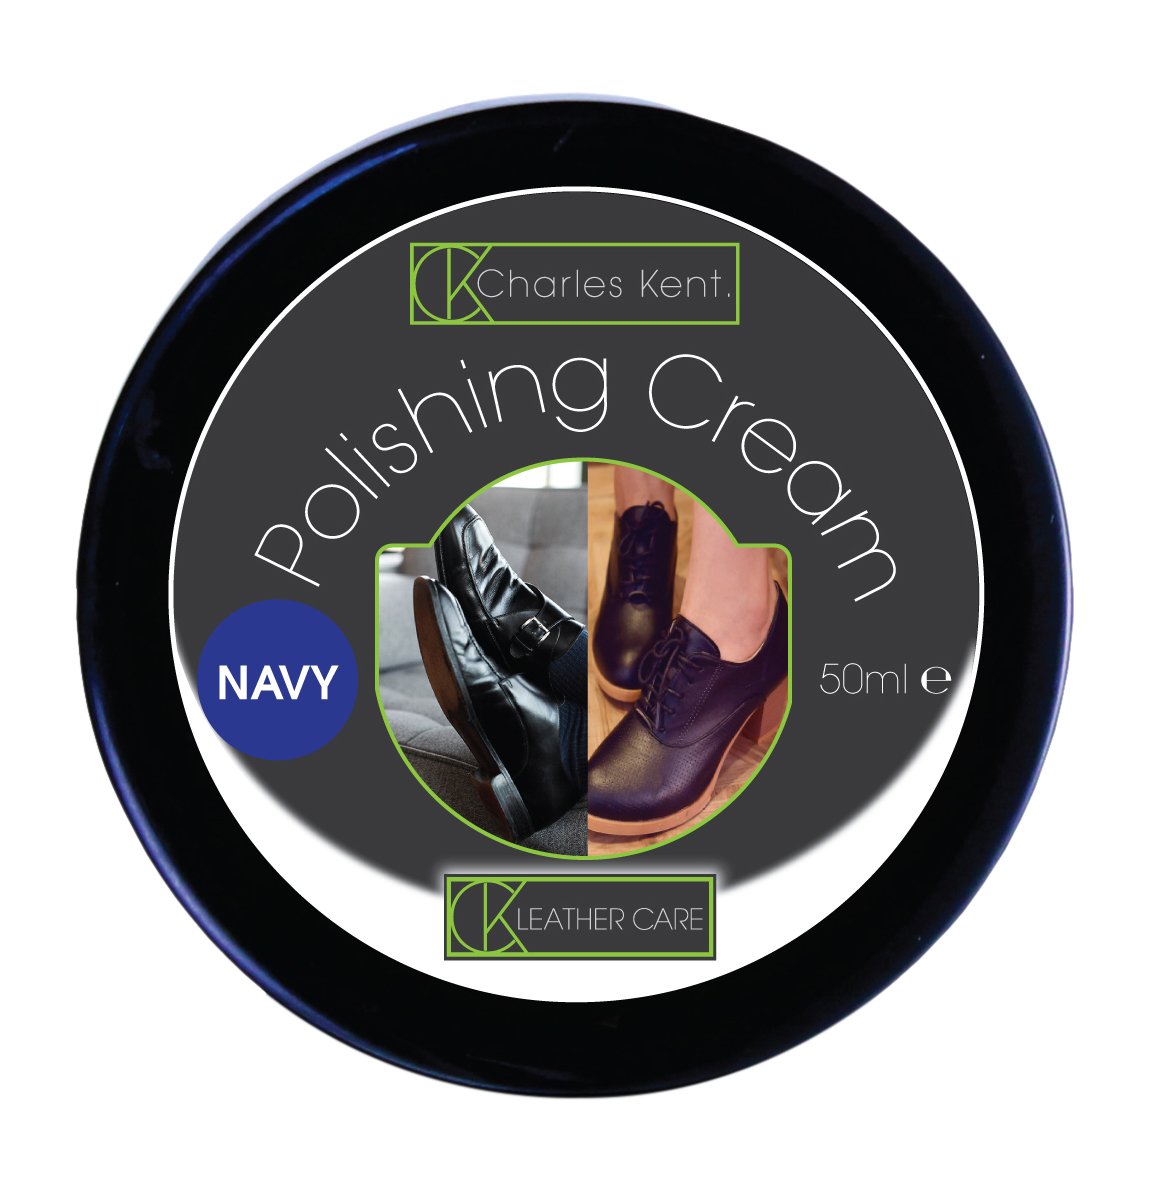 Charles Kent Polishing Cream Navy 50ml RRP 5.97 CLEARANCE XL 3.99